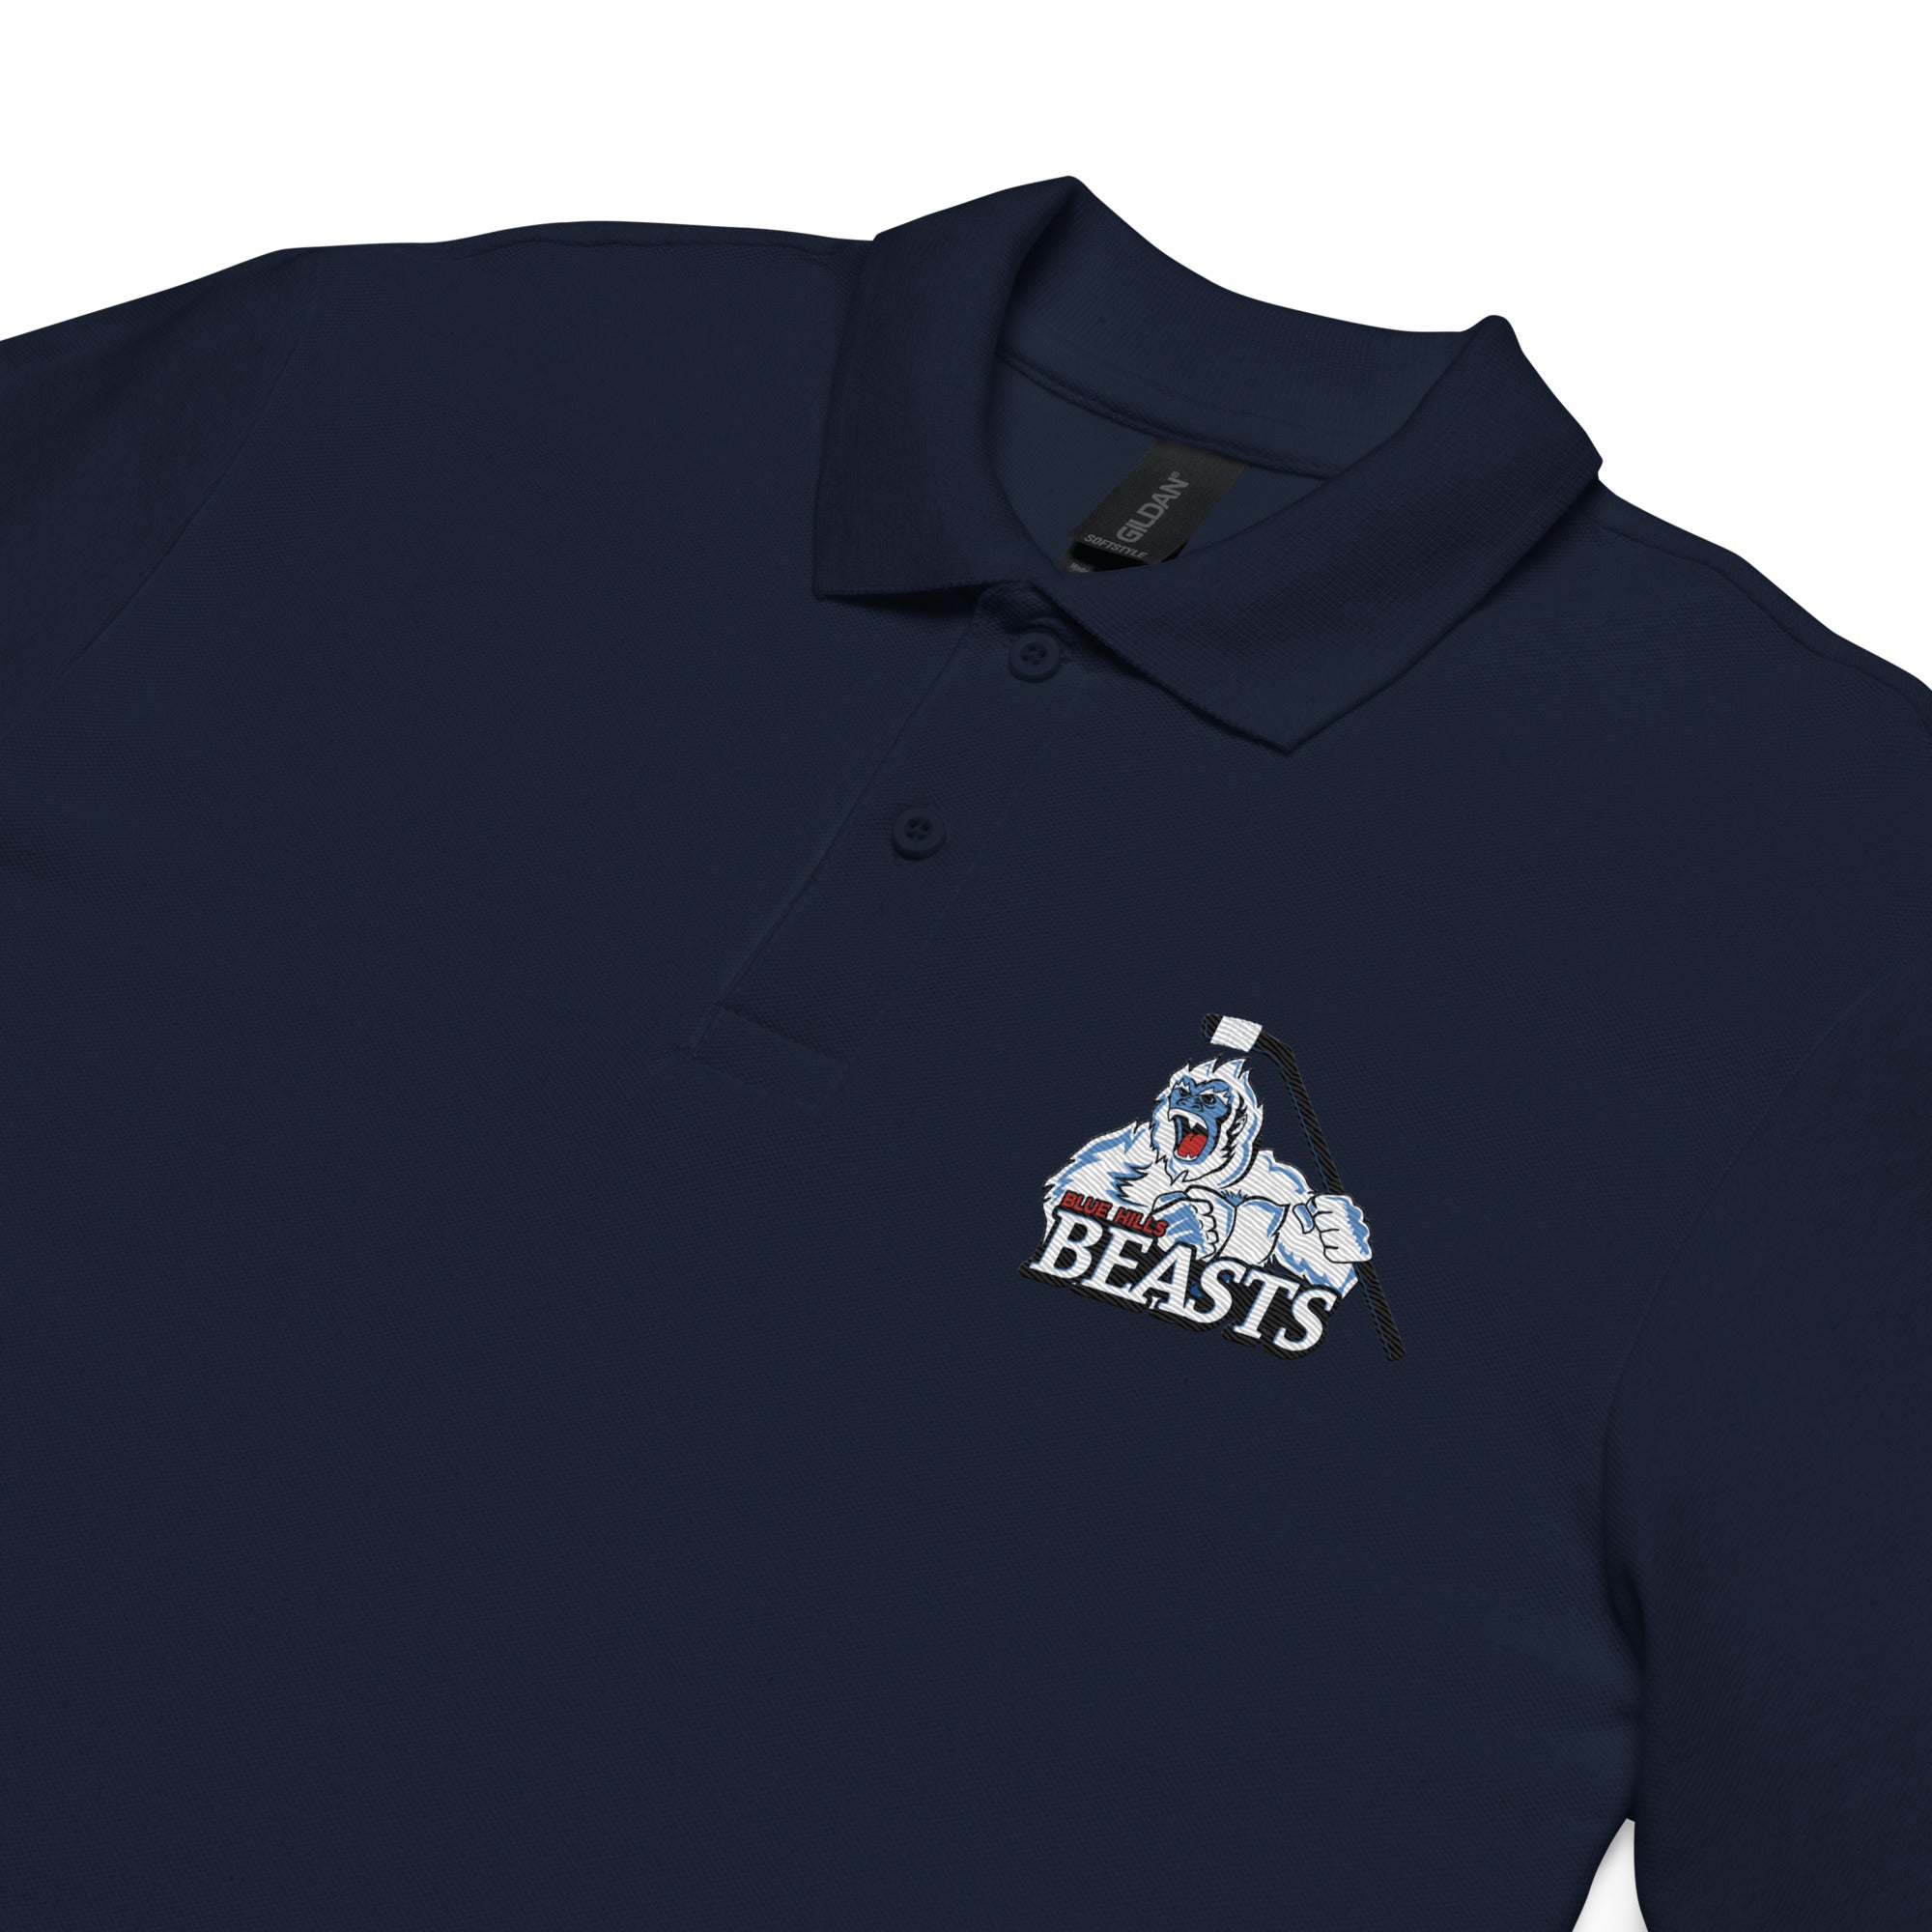 Blue Hills Beasts Unisex pique polo shirt